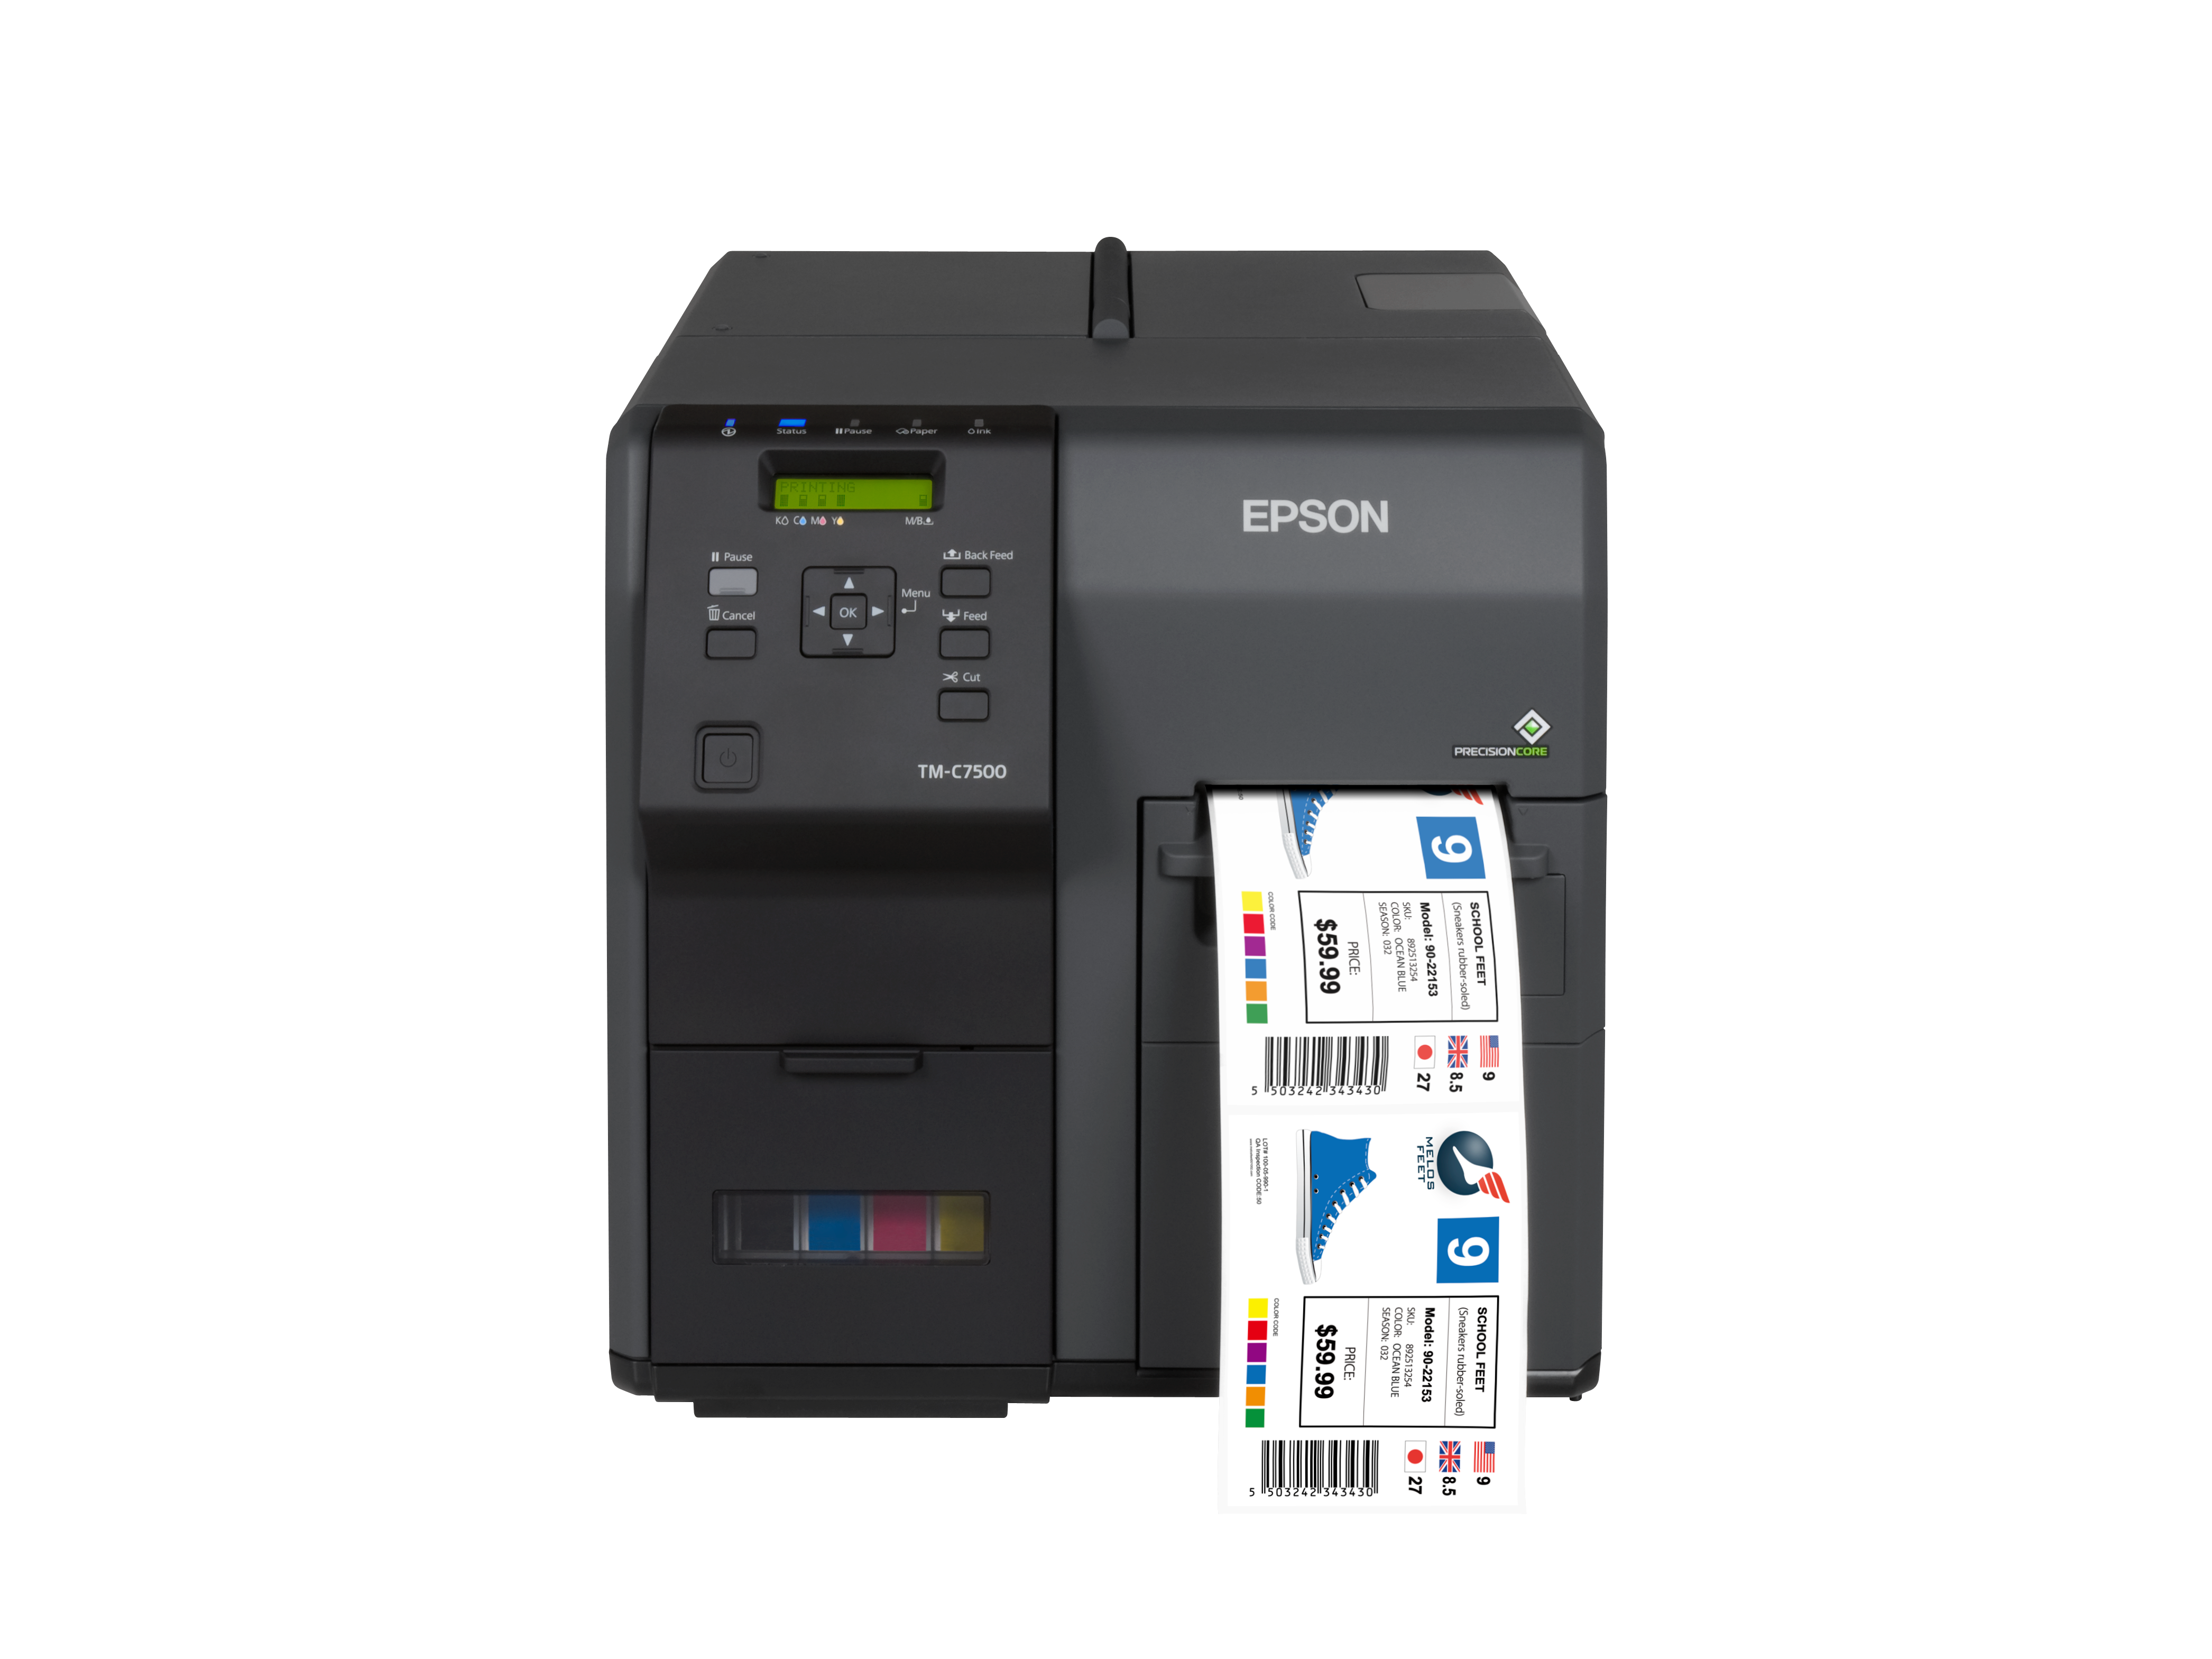 Epson7500, Rubino SRL - Macchine e Materiali per Etichette